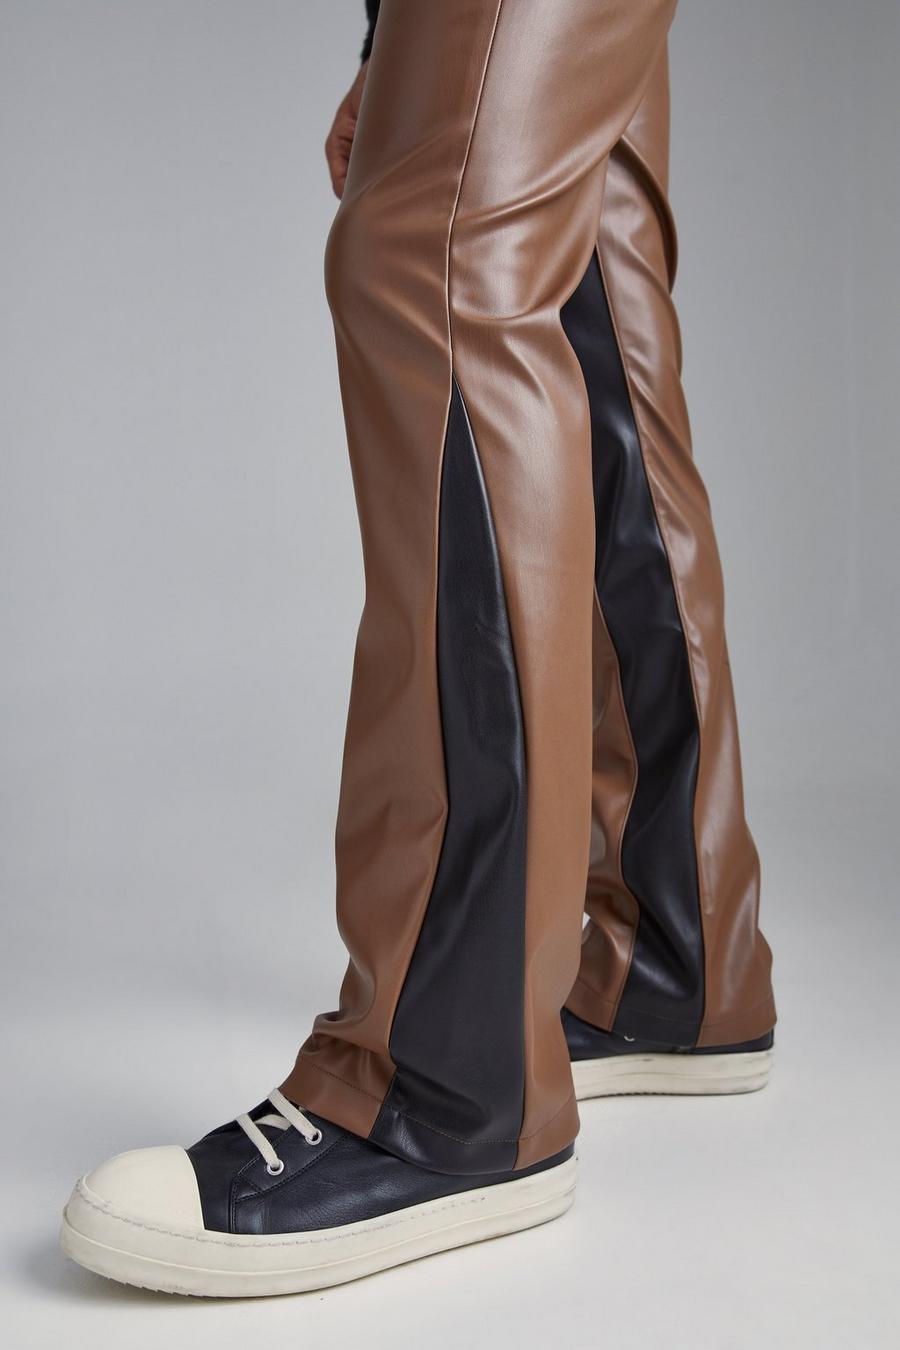 Pantaloni a zampa Slim Fit in PU con vita fissa, Chocolate